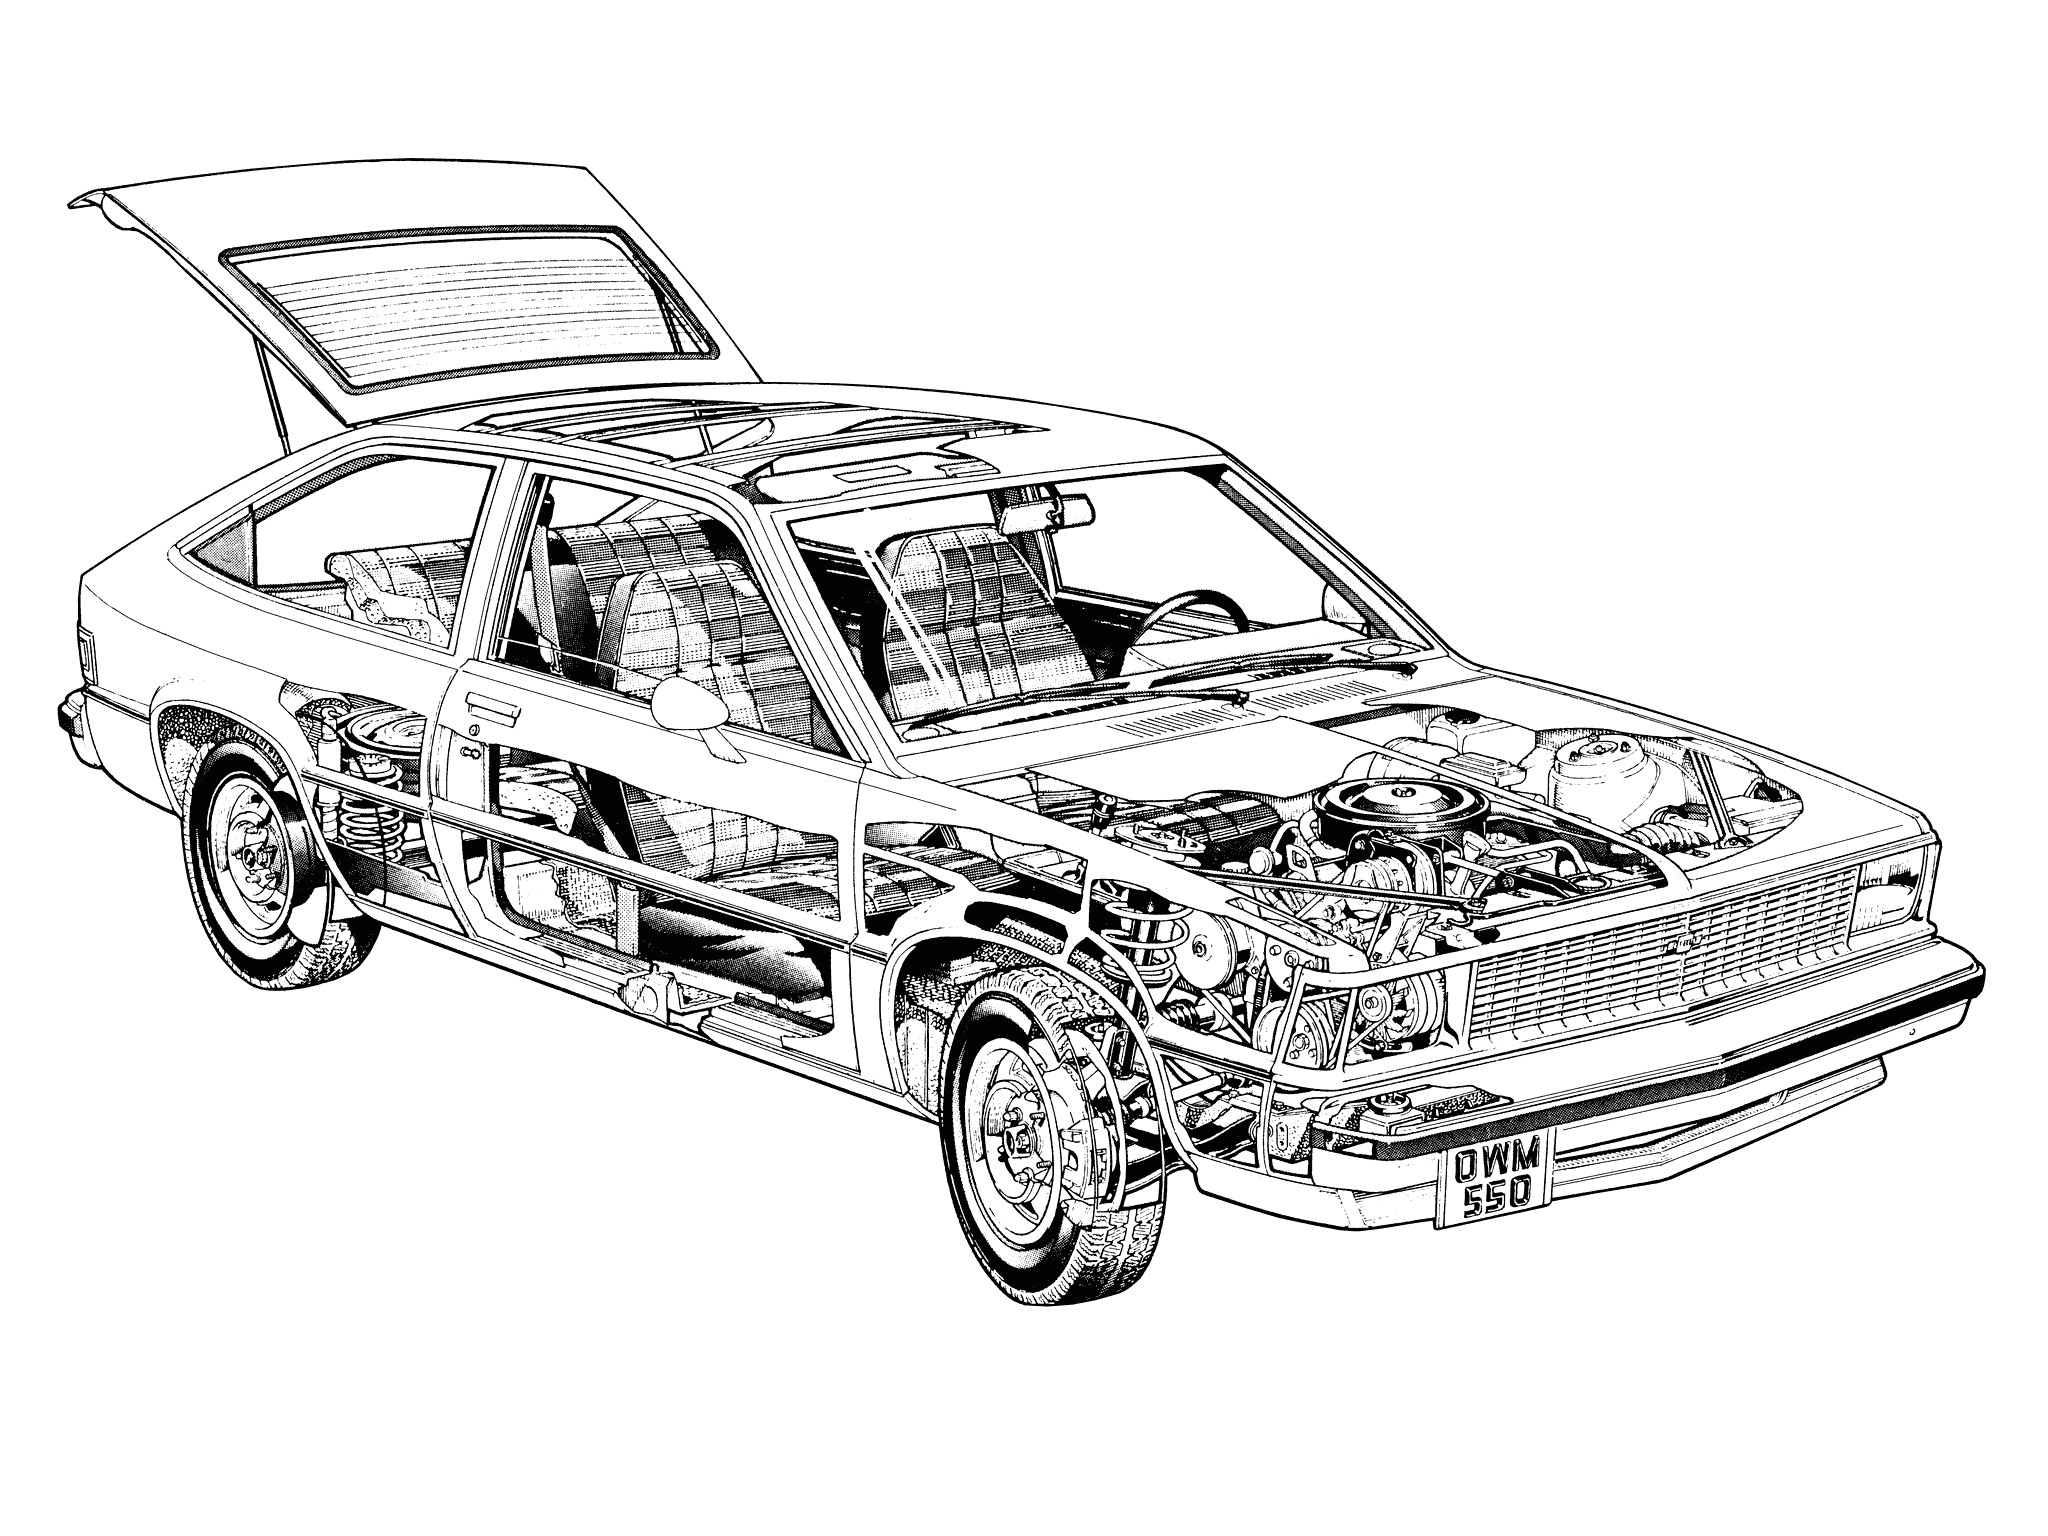 Chevrolet Citation cutaway drawing